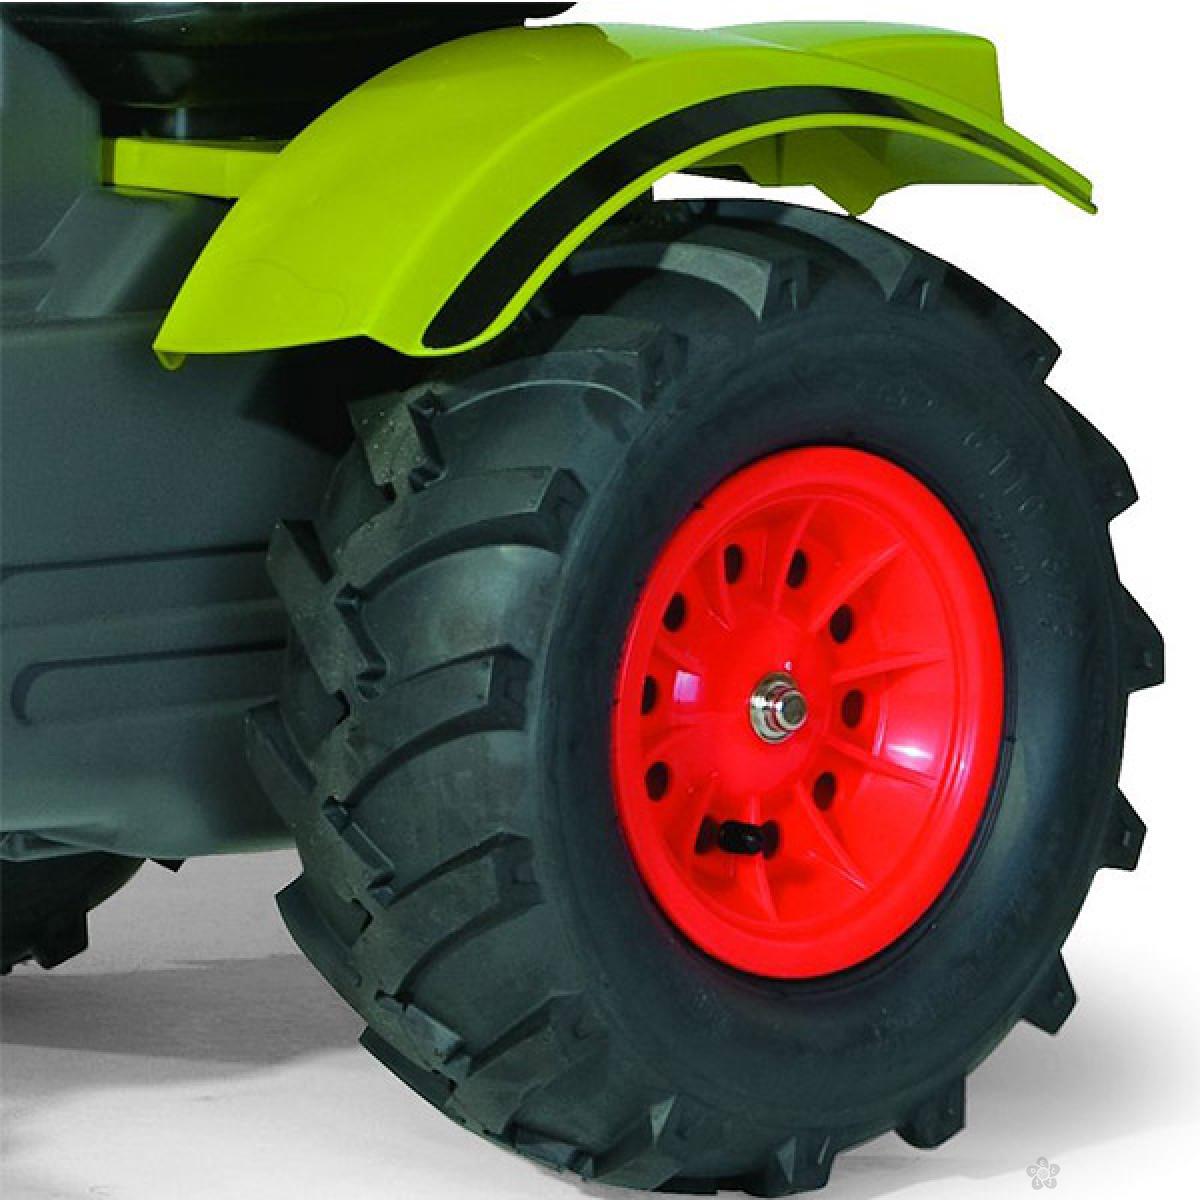 Traktor na pedale Rolly Toys Claas Axos 340 601042 